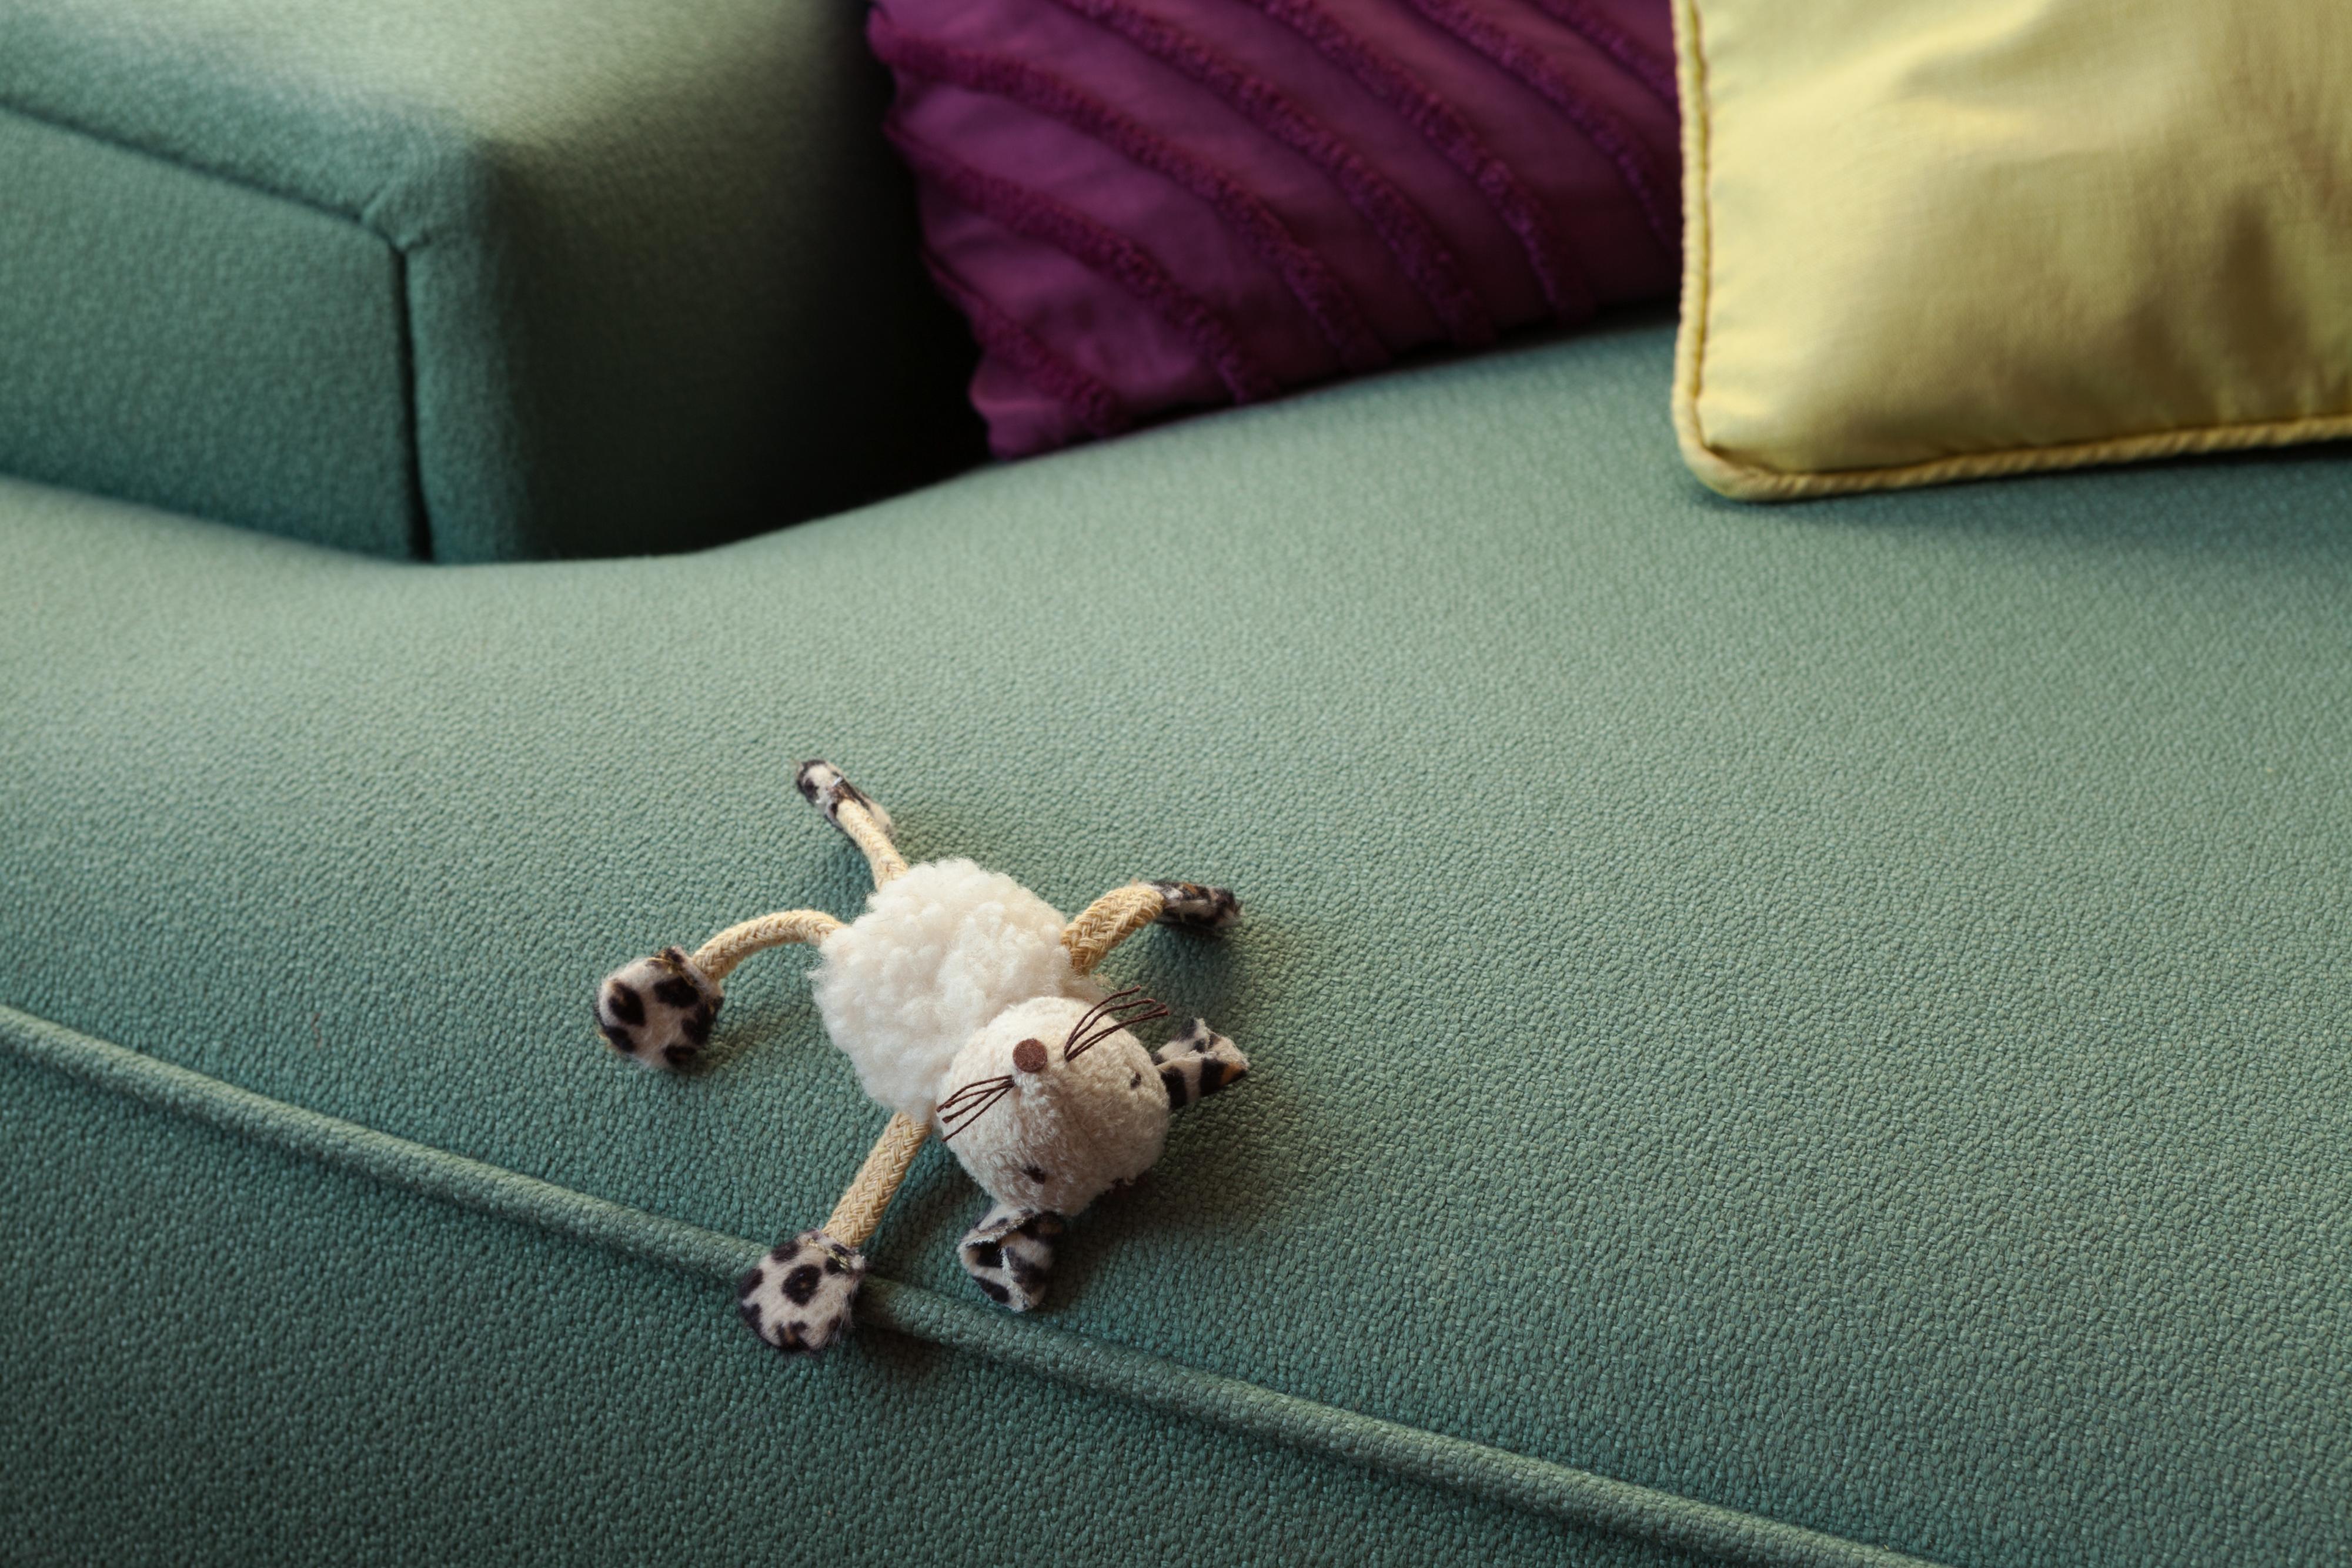 Jeanette May Color Photograph – Morbidity & Mortality: Maus Humorvolle Fotografie eines Katzenspielzeugs in Krimsszene